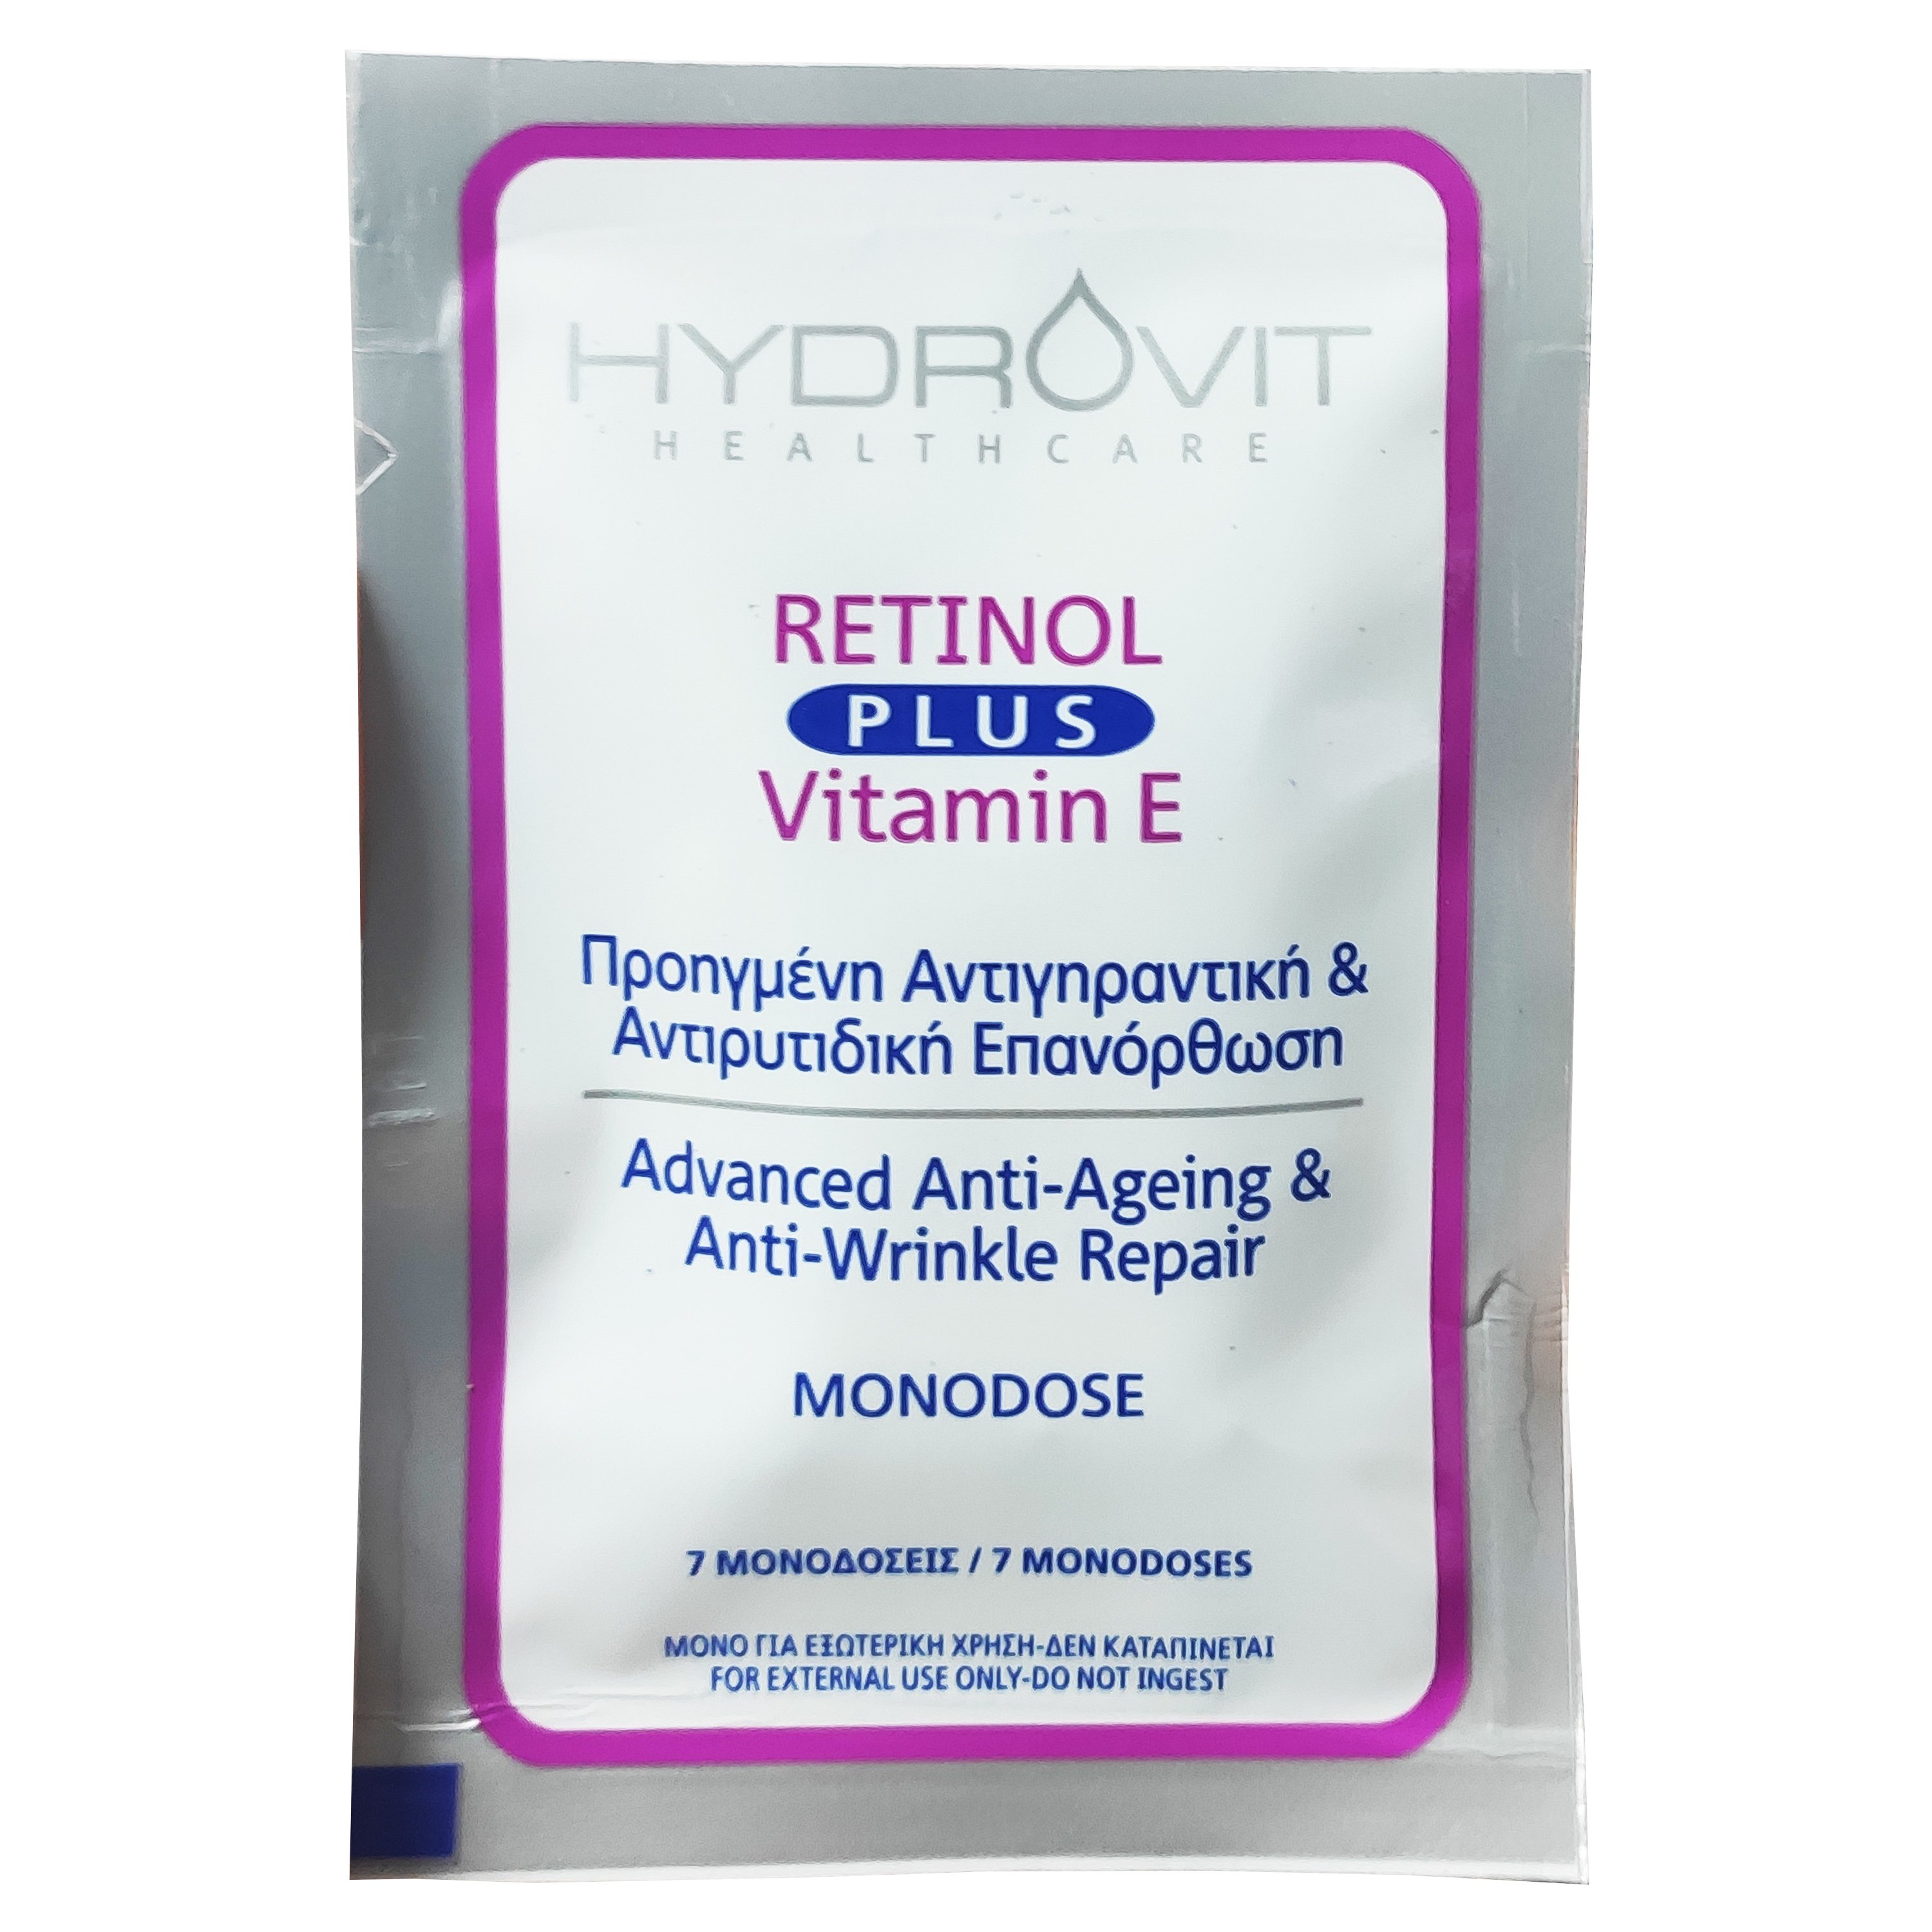 Target Pharma Hydrovit Retinol Plus Vitamin E Monodoses Ορός Προηγμένης Αντιγηραντικής & Αντιρυτιδικής Φροντίδας σε Μονοδόσεις 7caps